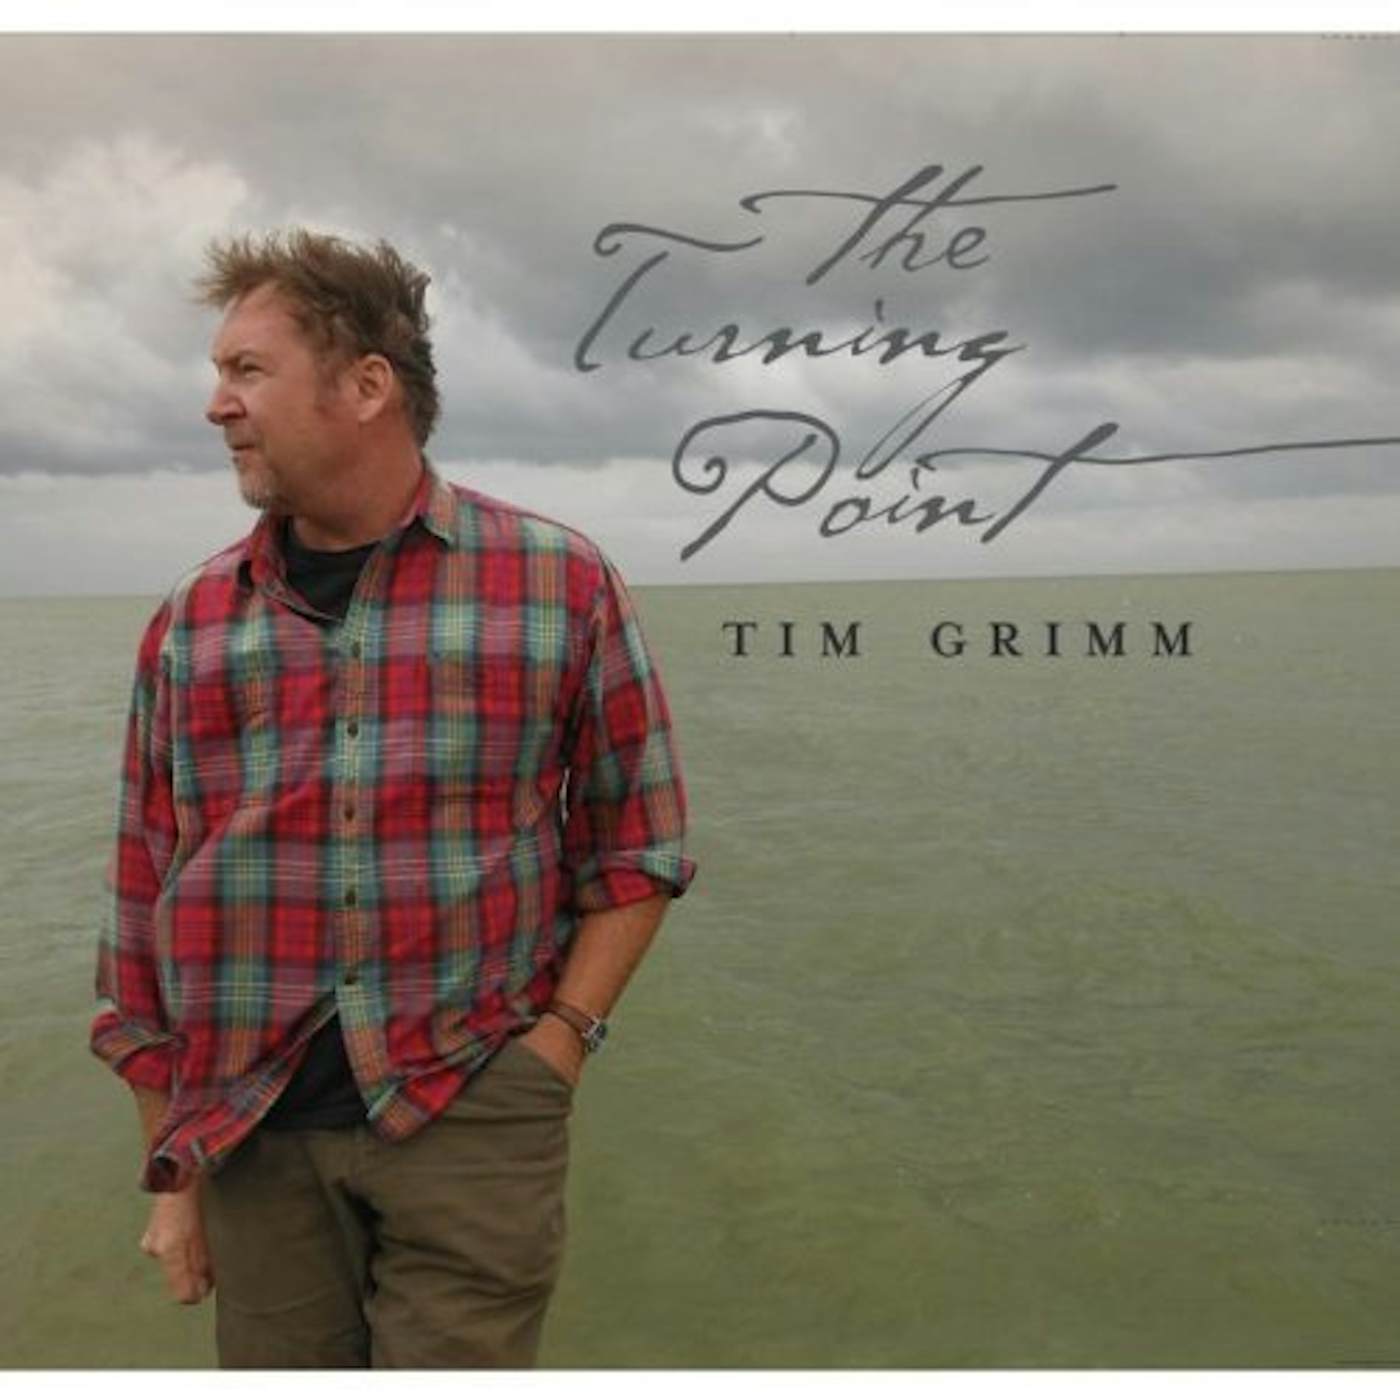 Tim Grimm TURNING POINT CD